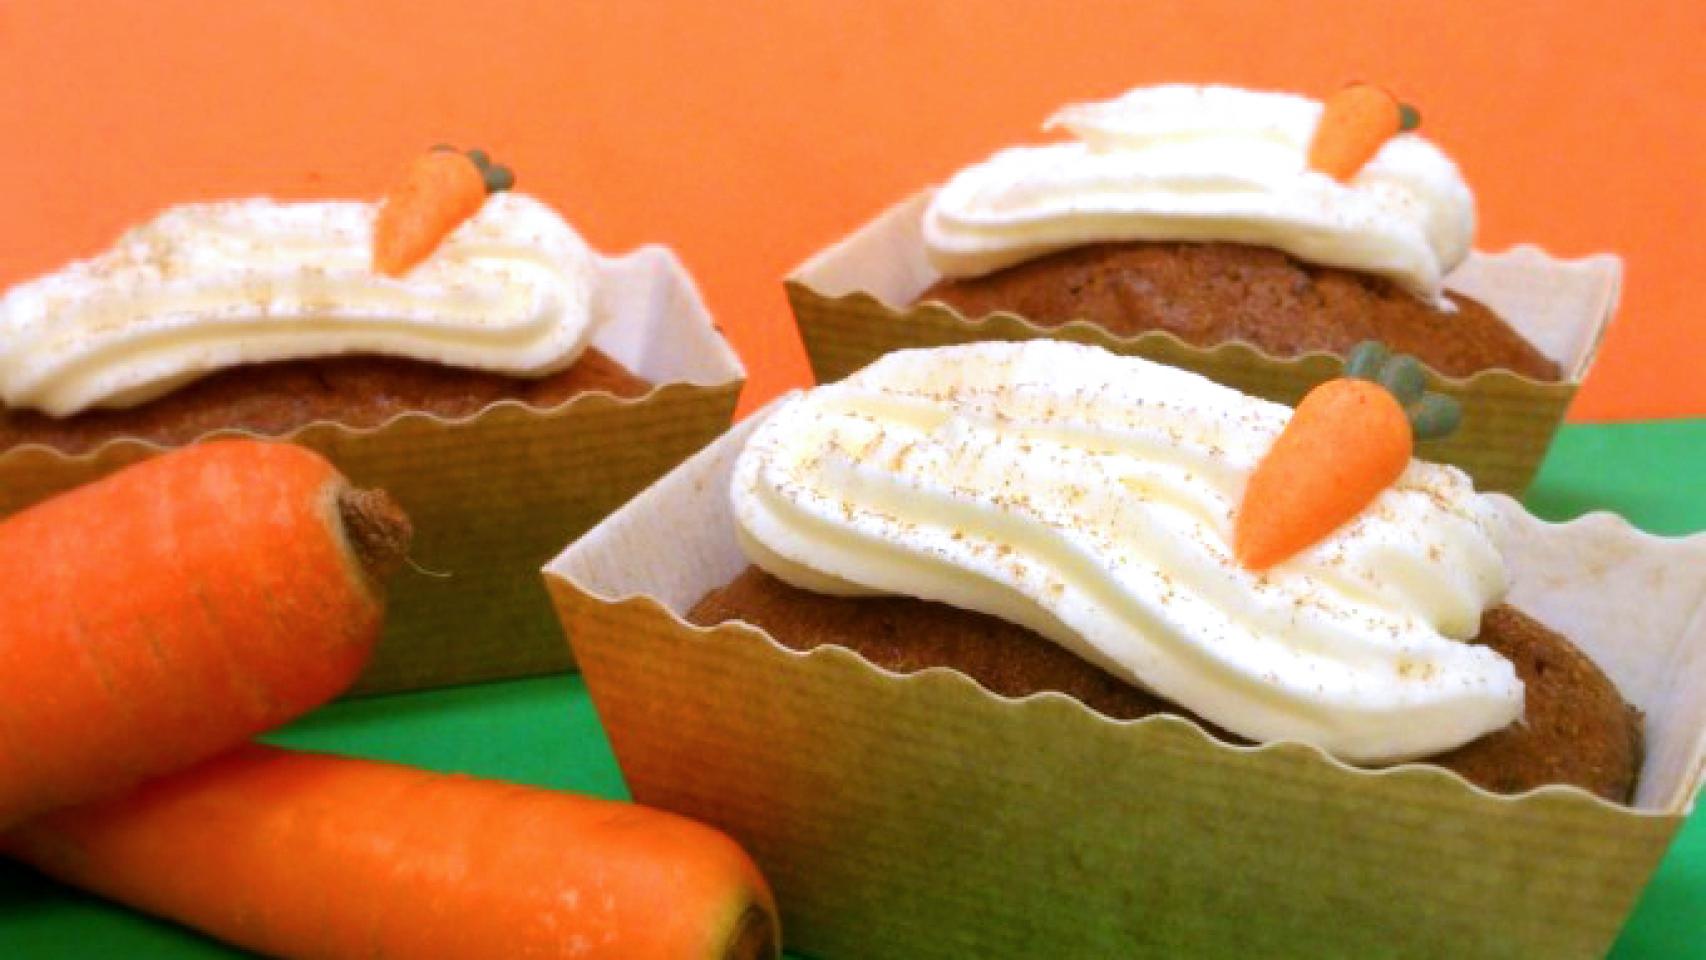 Mini carrot cakes y cupcakes